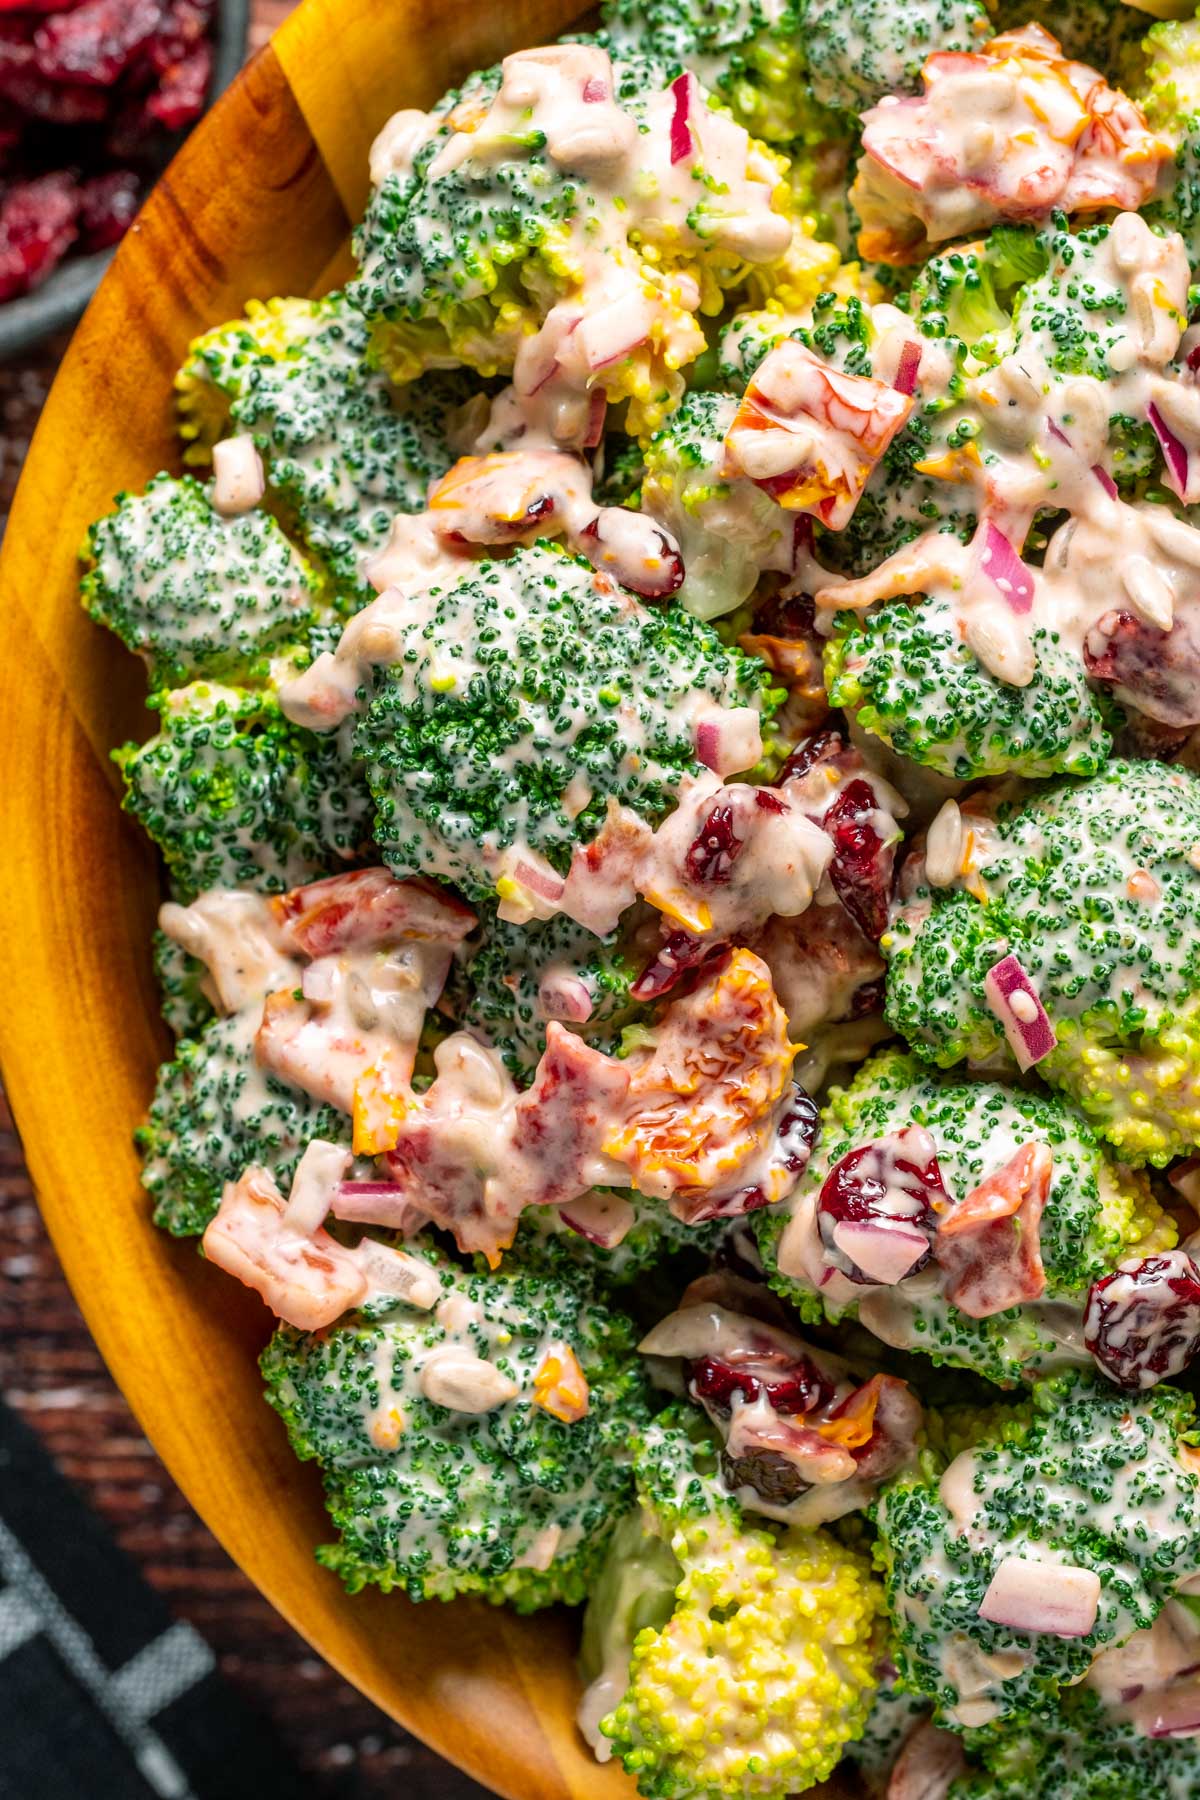 Vegan broccoli salad in a wooden bowl.